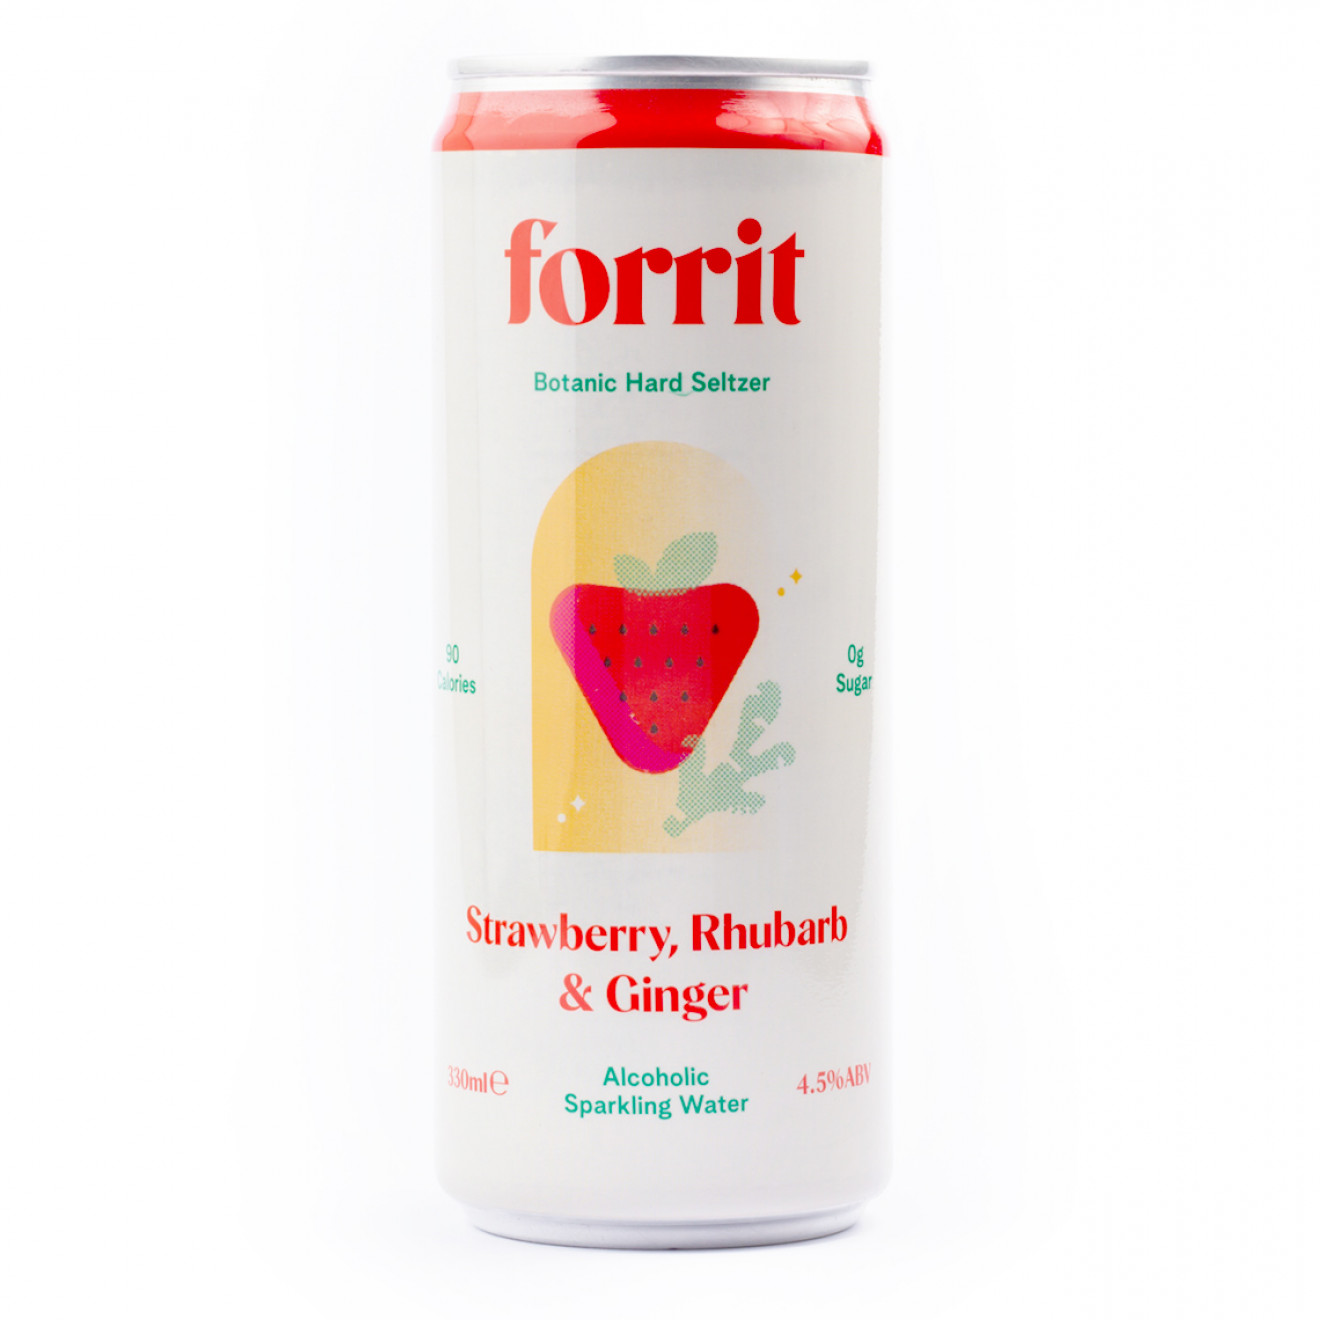 Forrit - Strawberry, Rhubarb & Ginger - 330ml